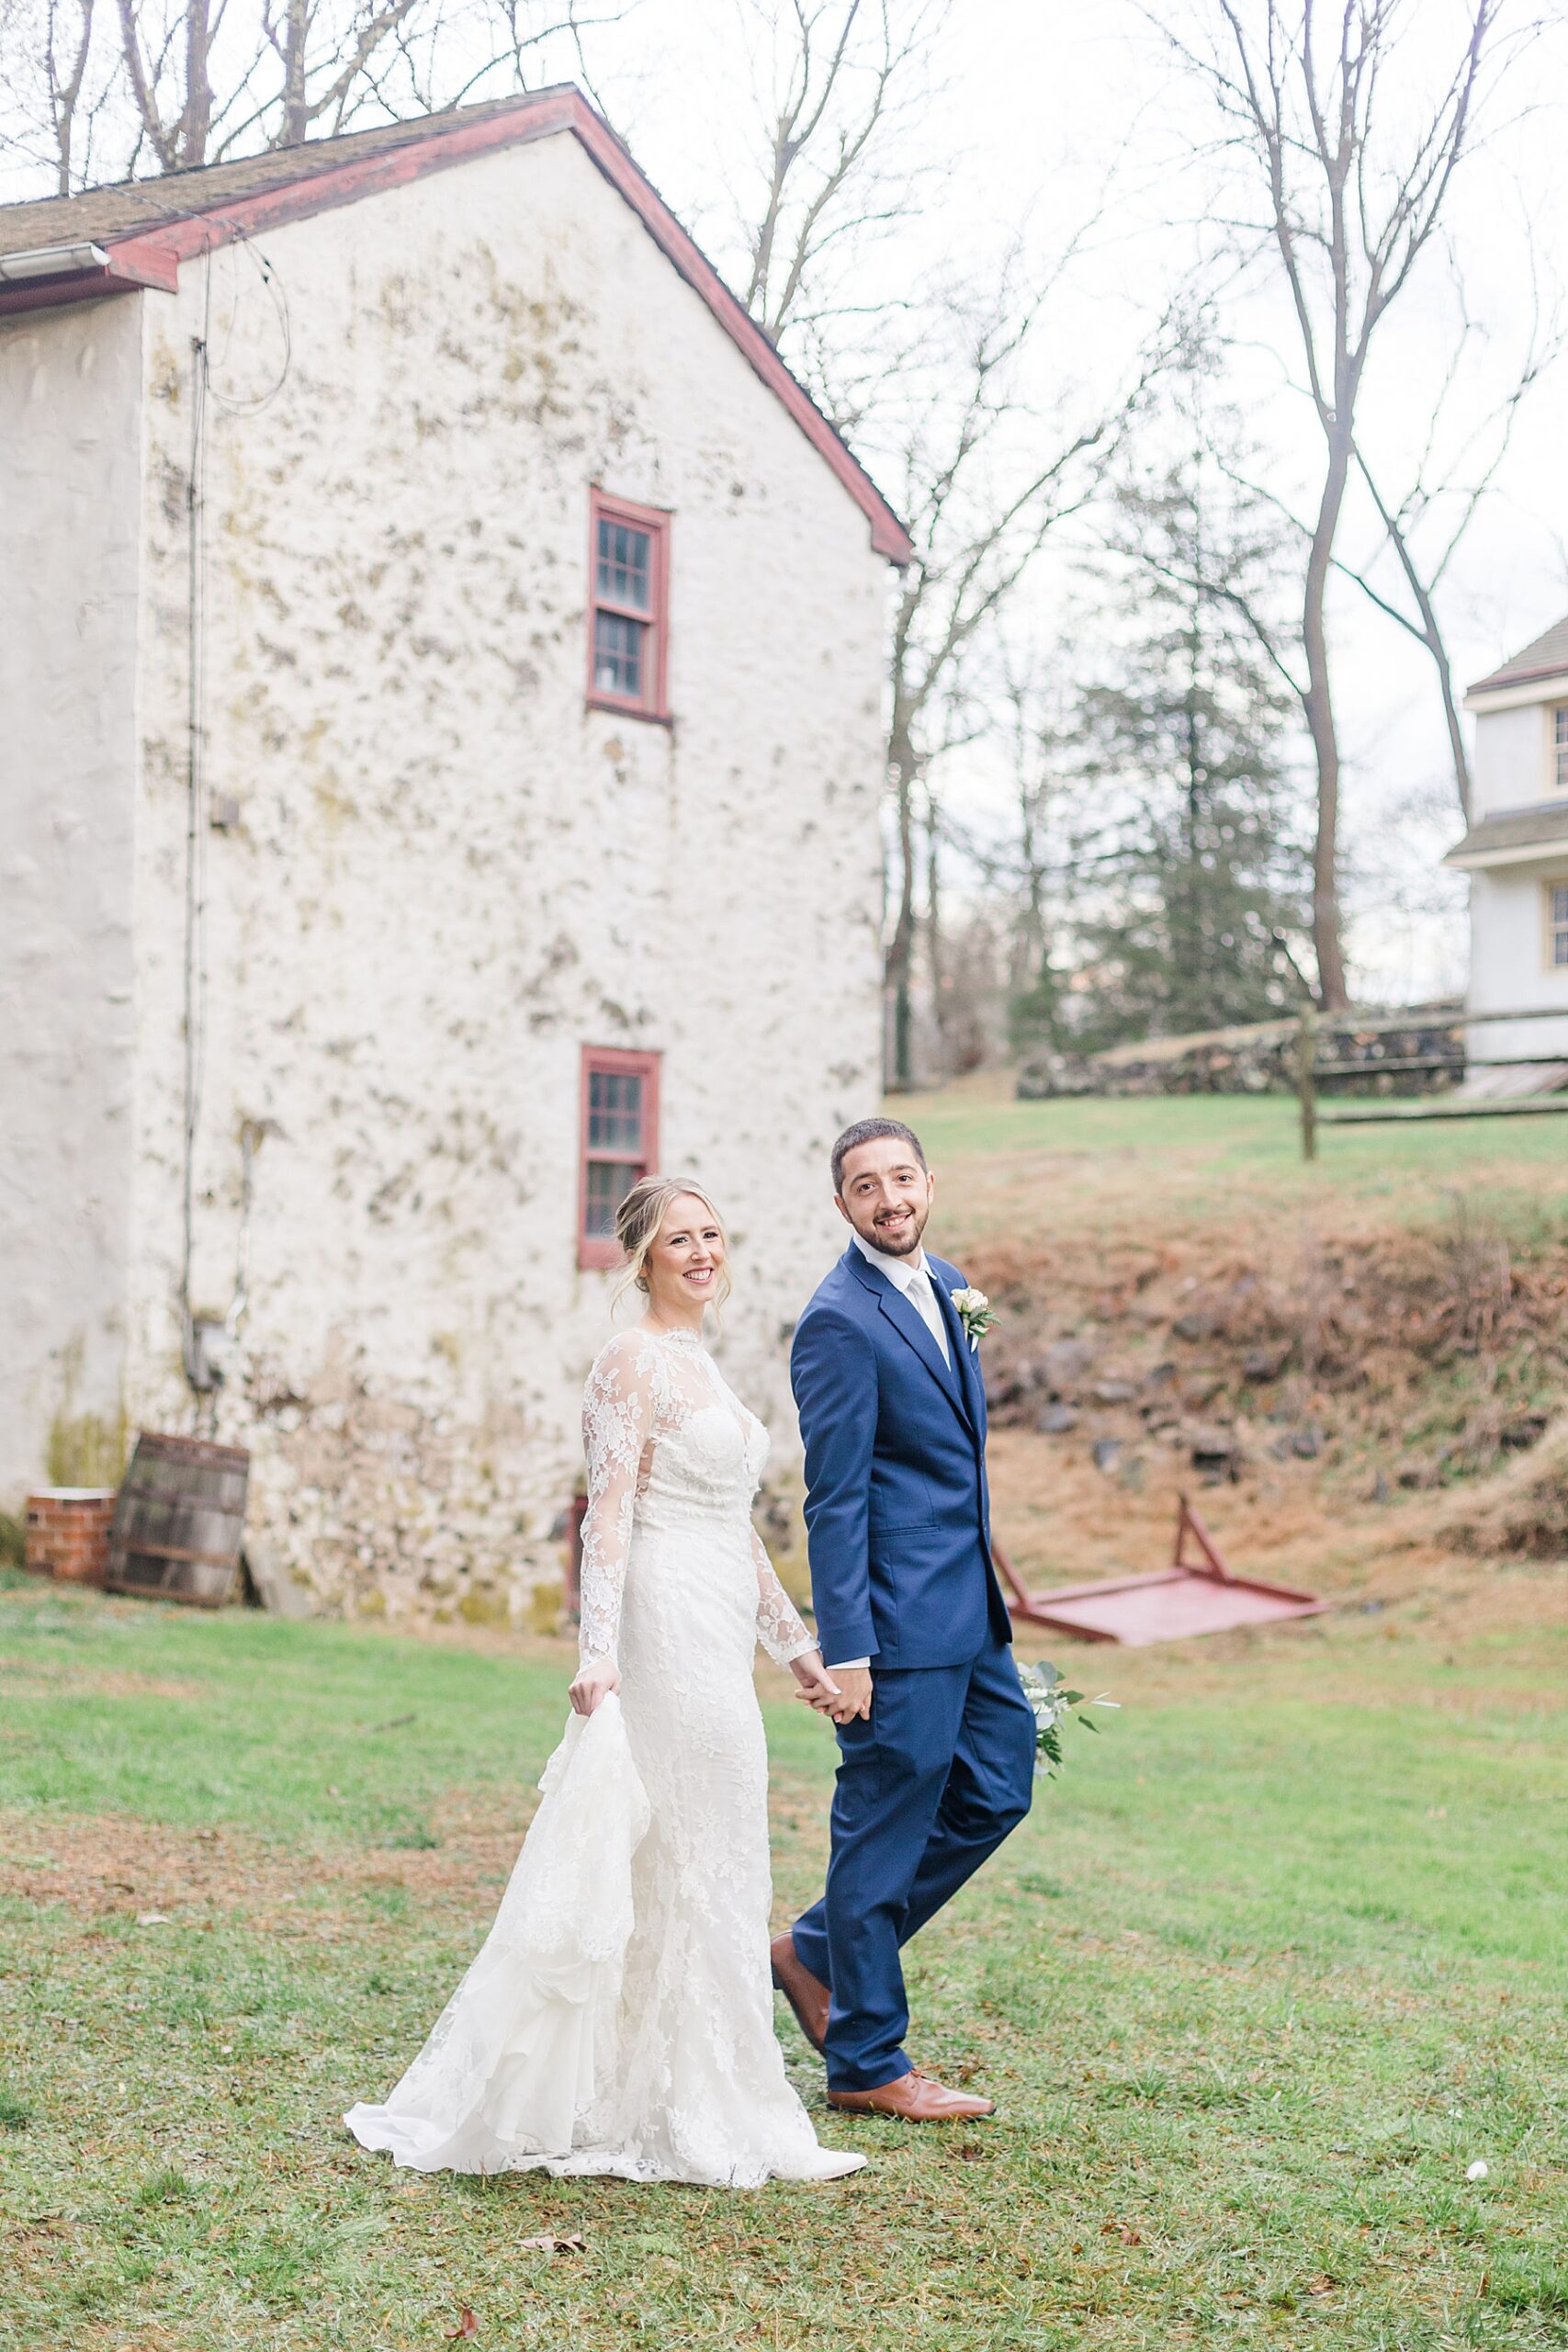 couple walking wedding venue holding hands in Glen Mills, PA